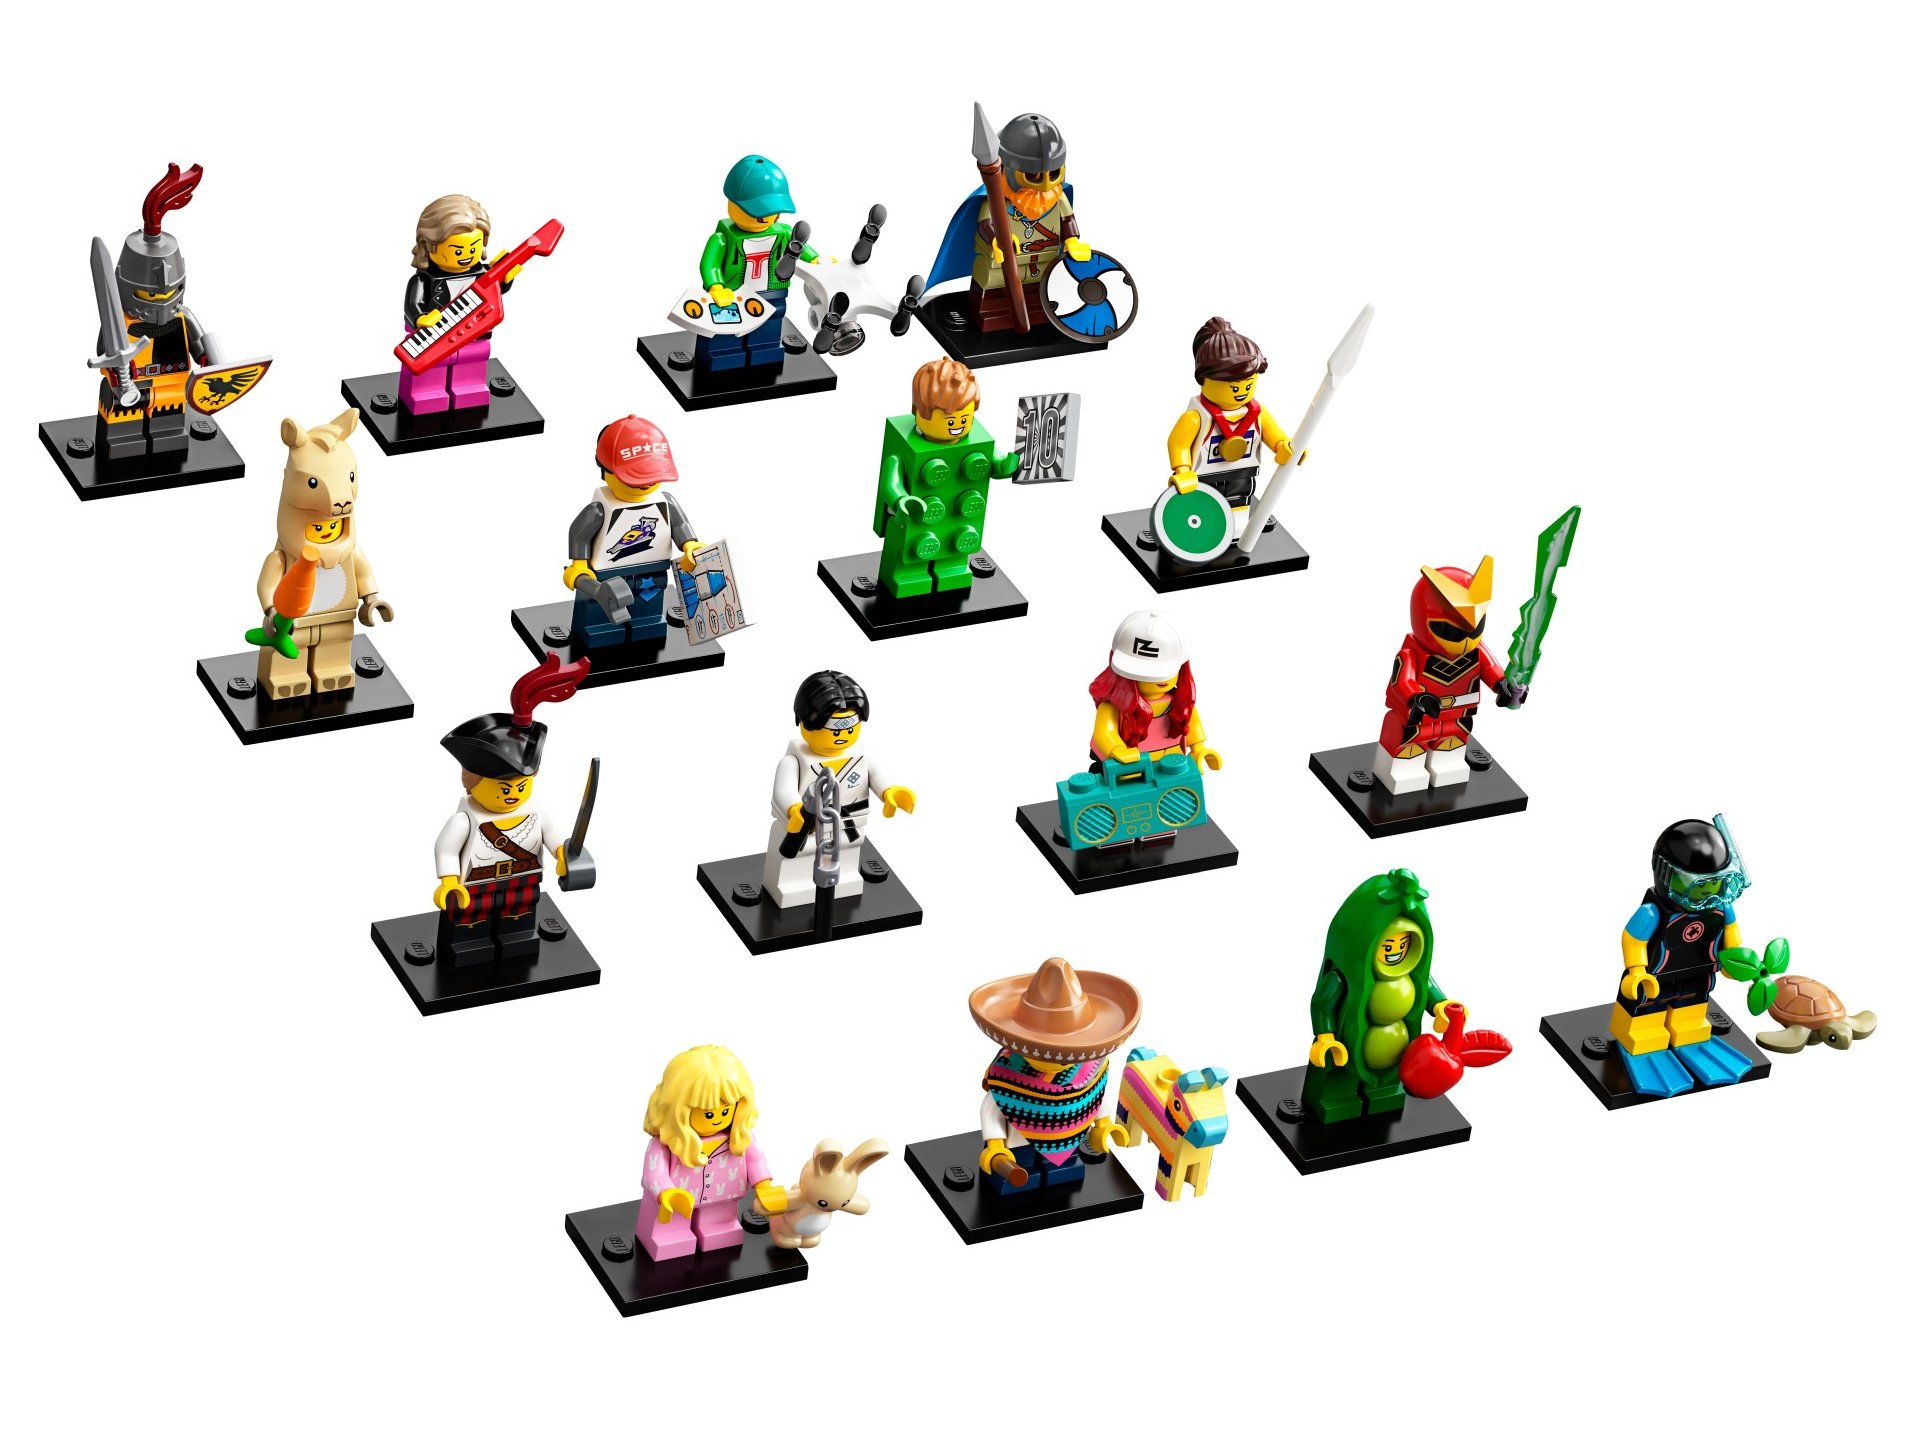 Lego 71027 Minifiguren Serie 20 Ab 27 April 2020 Verfügbar Brickzeit